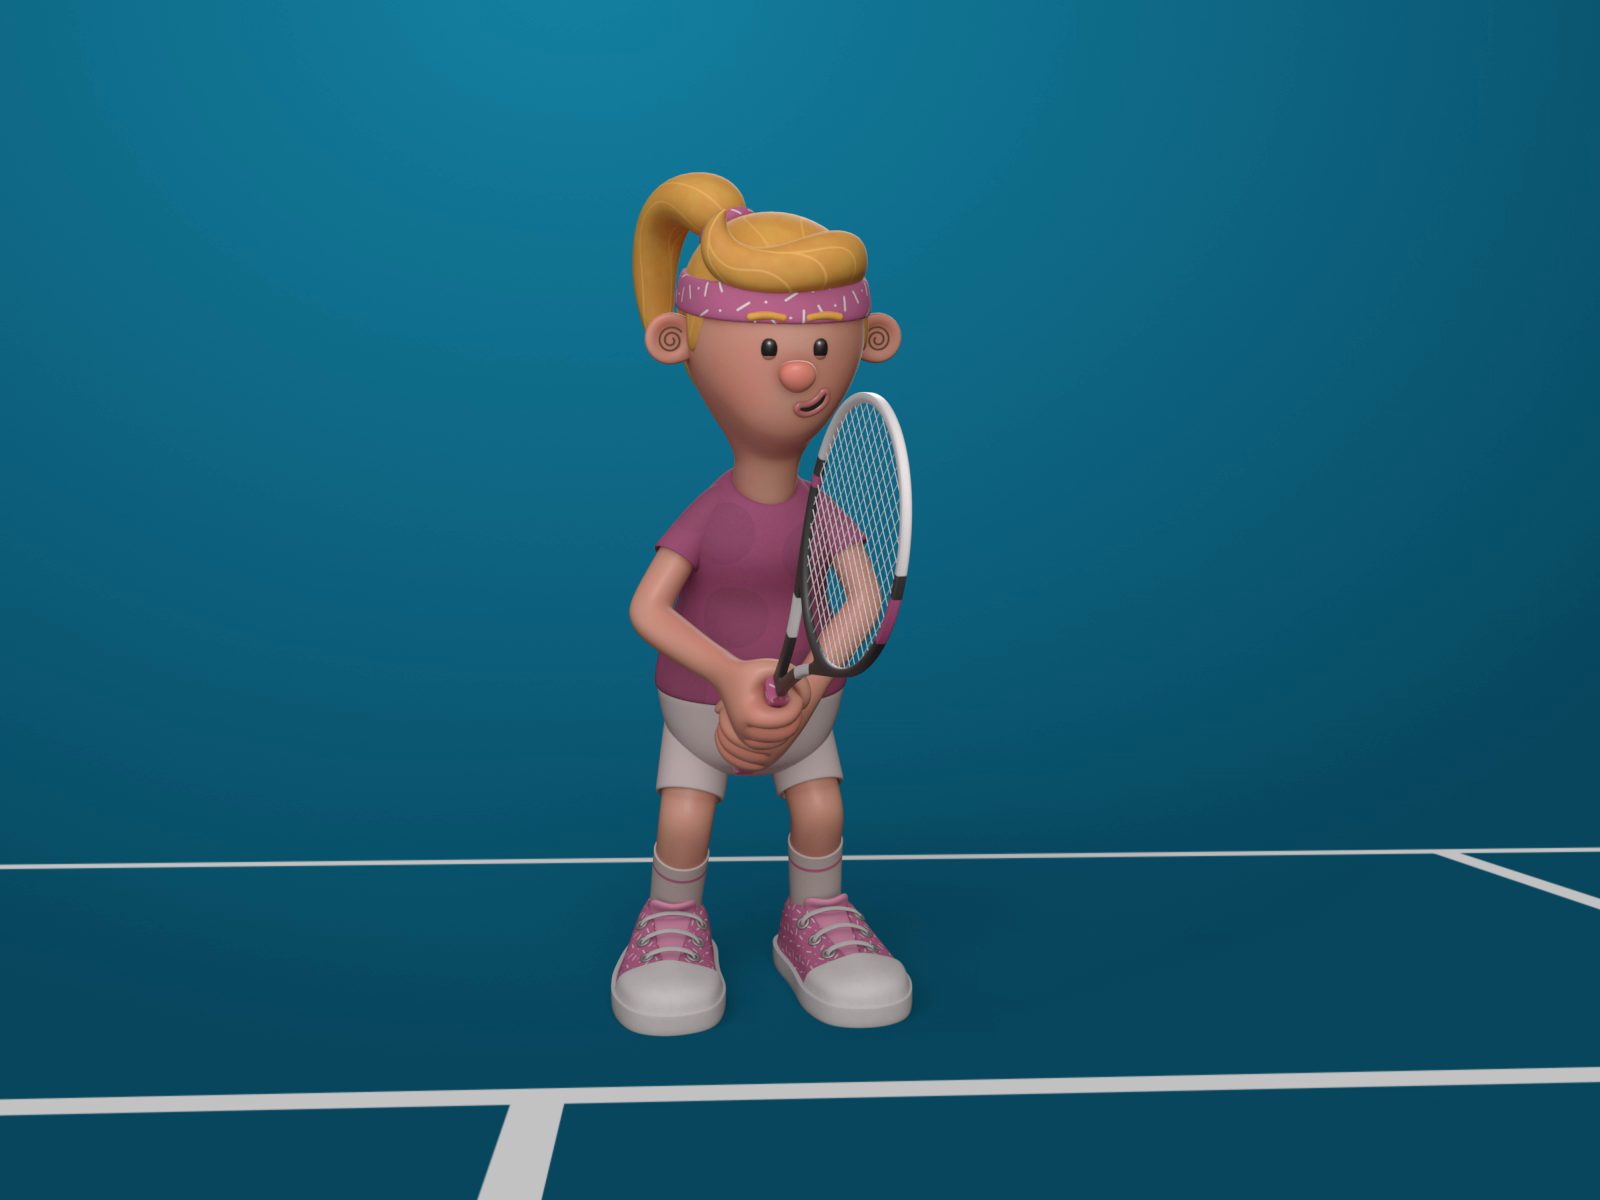 Teresa the Tennis Star by Derek Animates on Dribbble